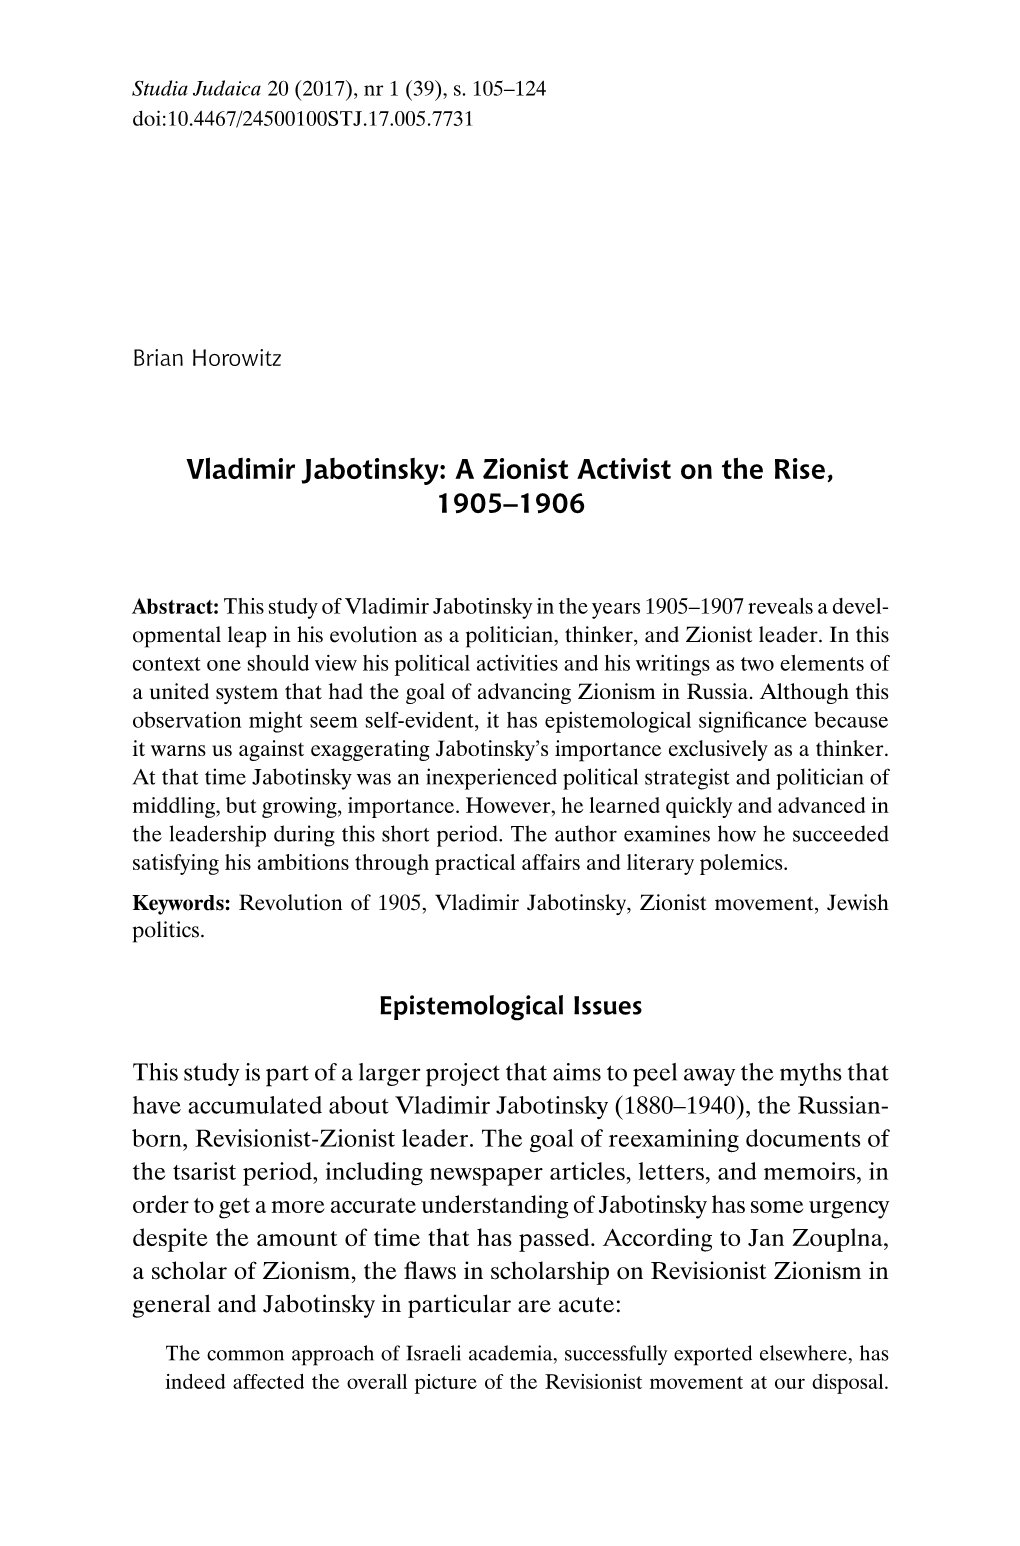 Vladimir Jabotinsky: a Zionist Activist on the Rise, 1905–1906